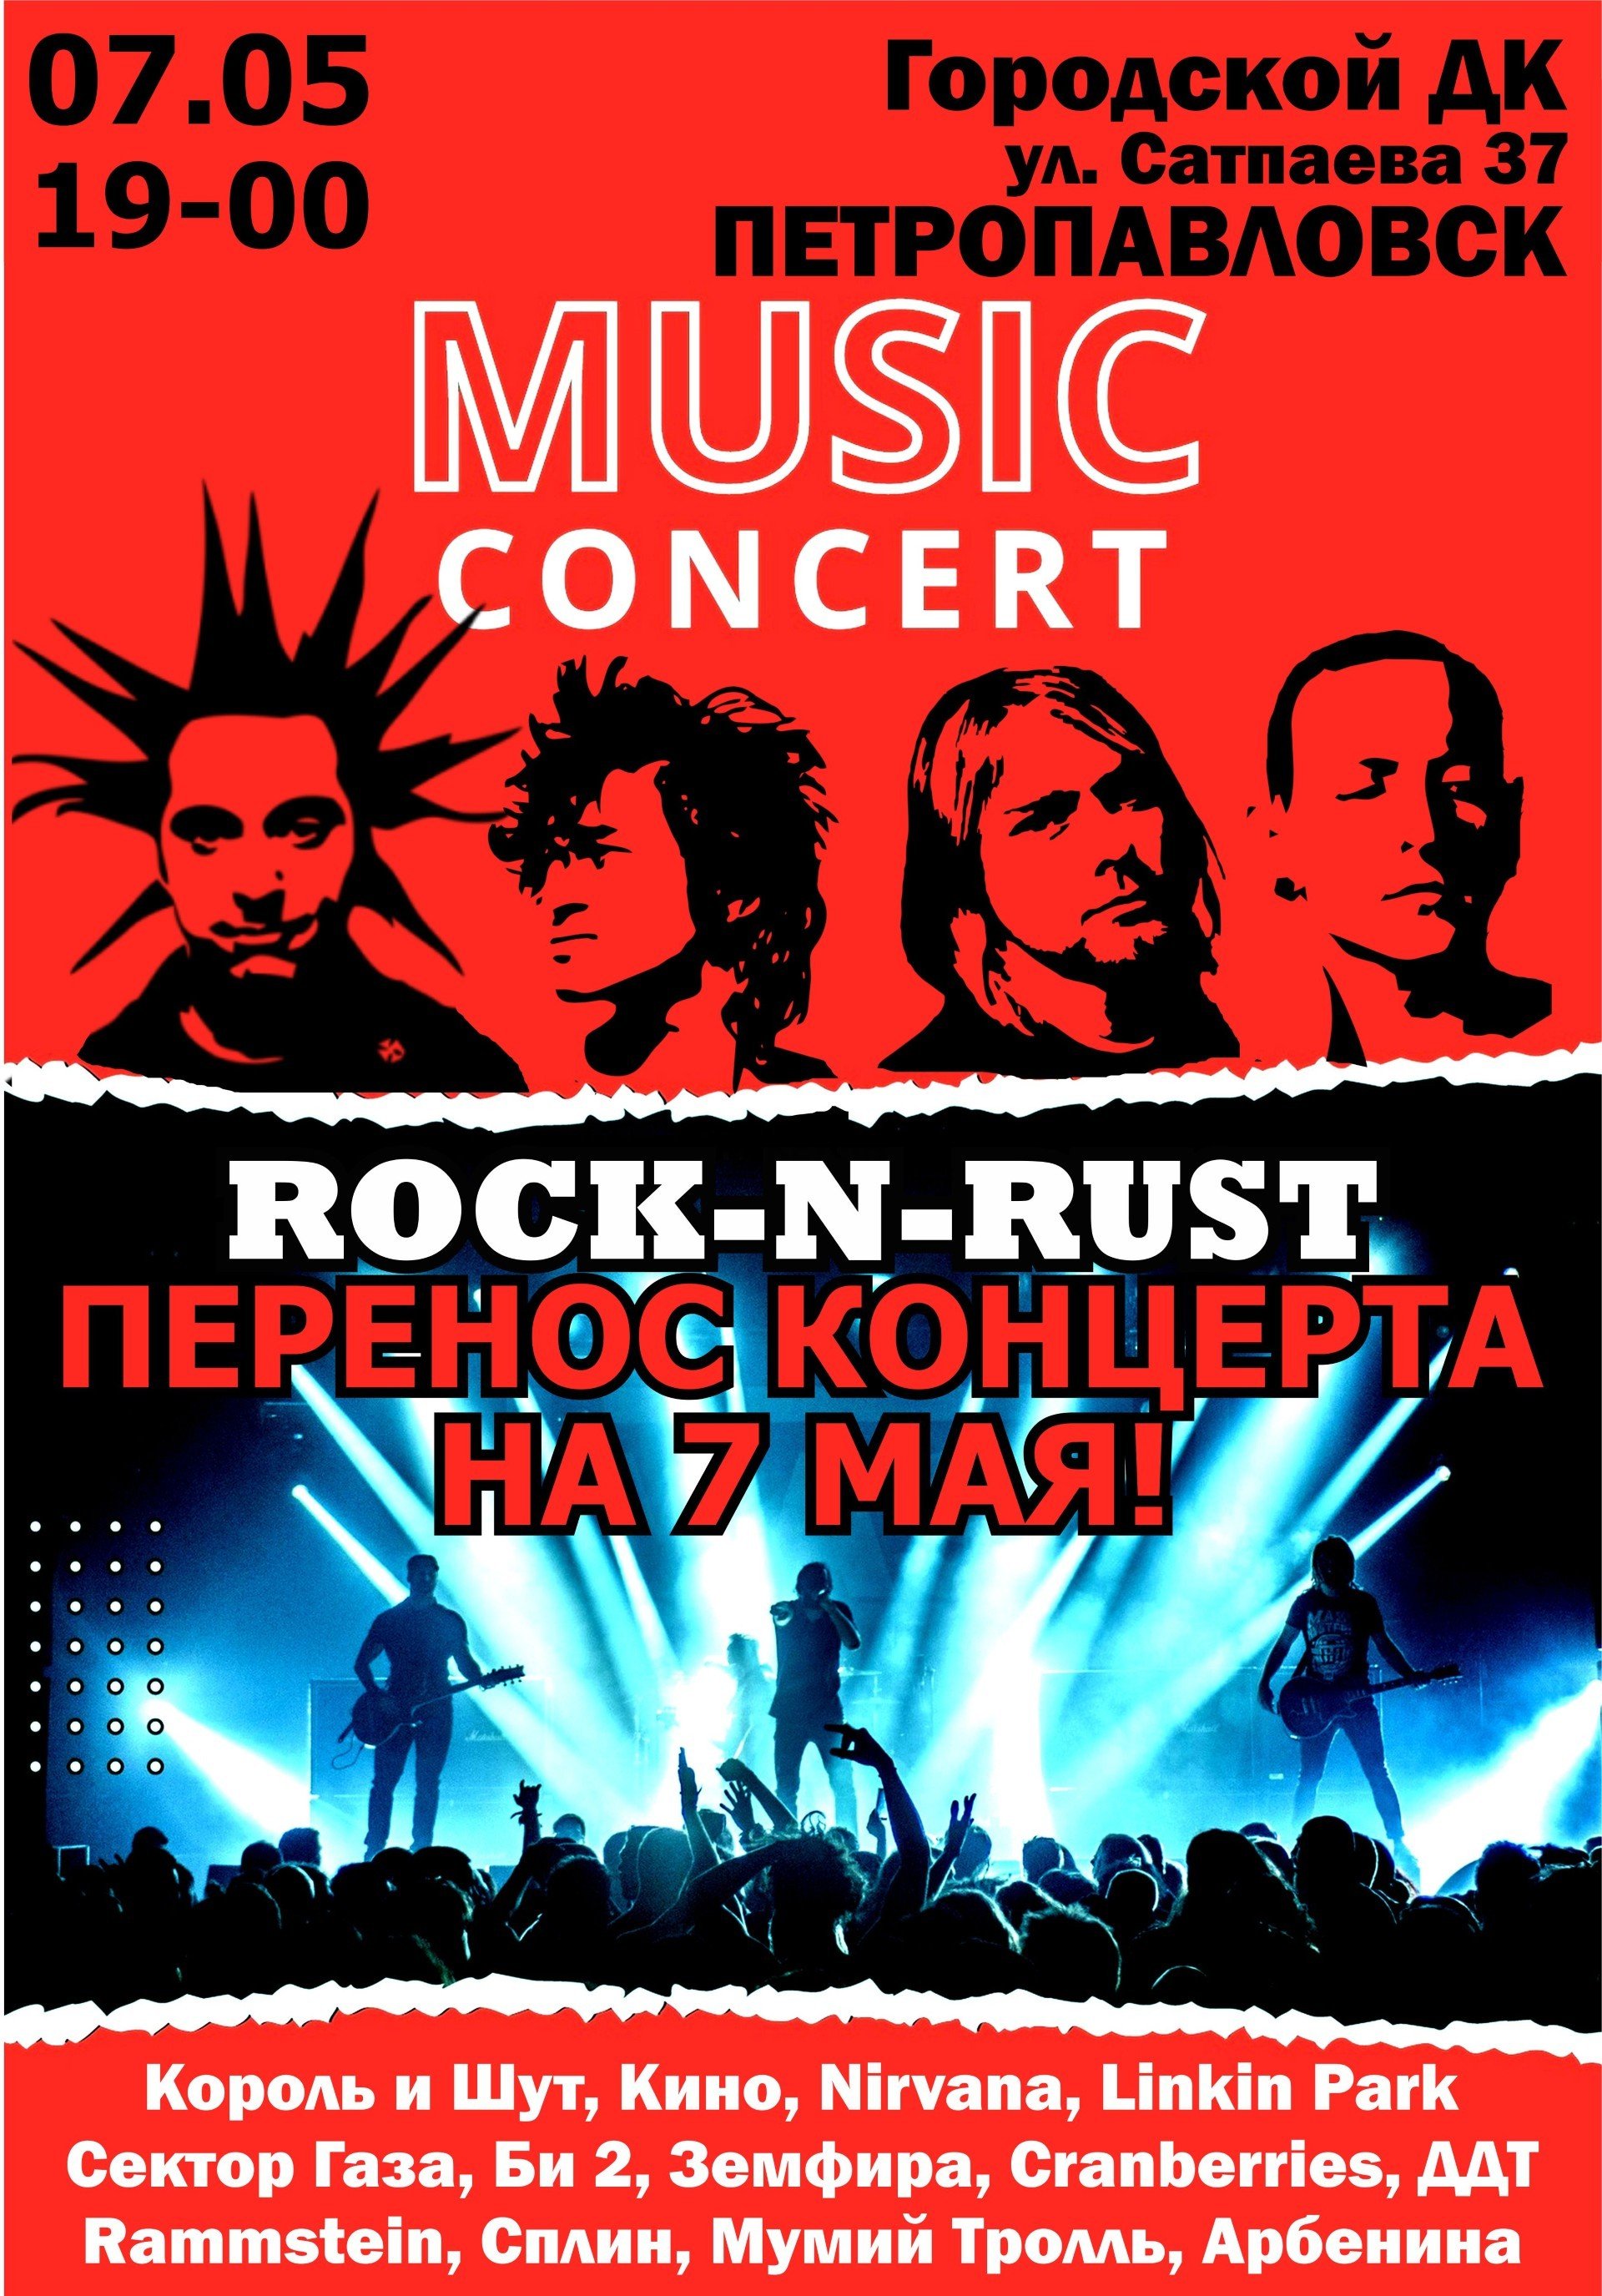 Rock-n-rust. Music Concert in Petropavlovsk